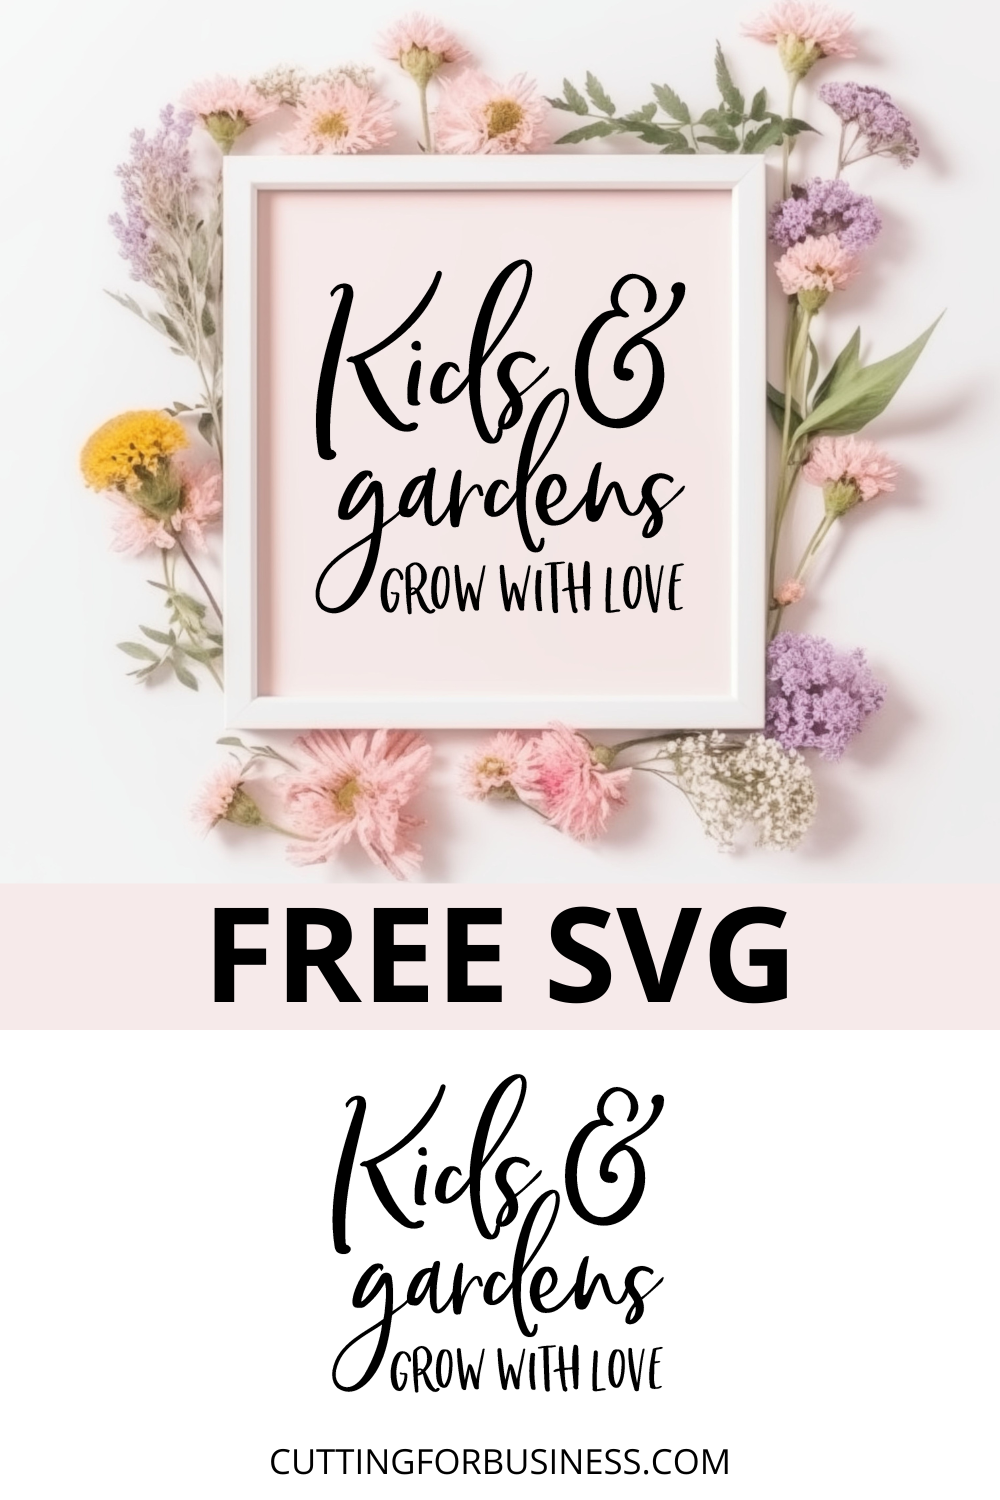 Free Spring SVG - cuttingforbusiness.com